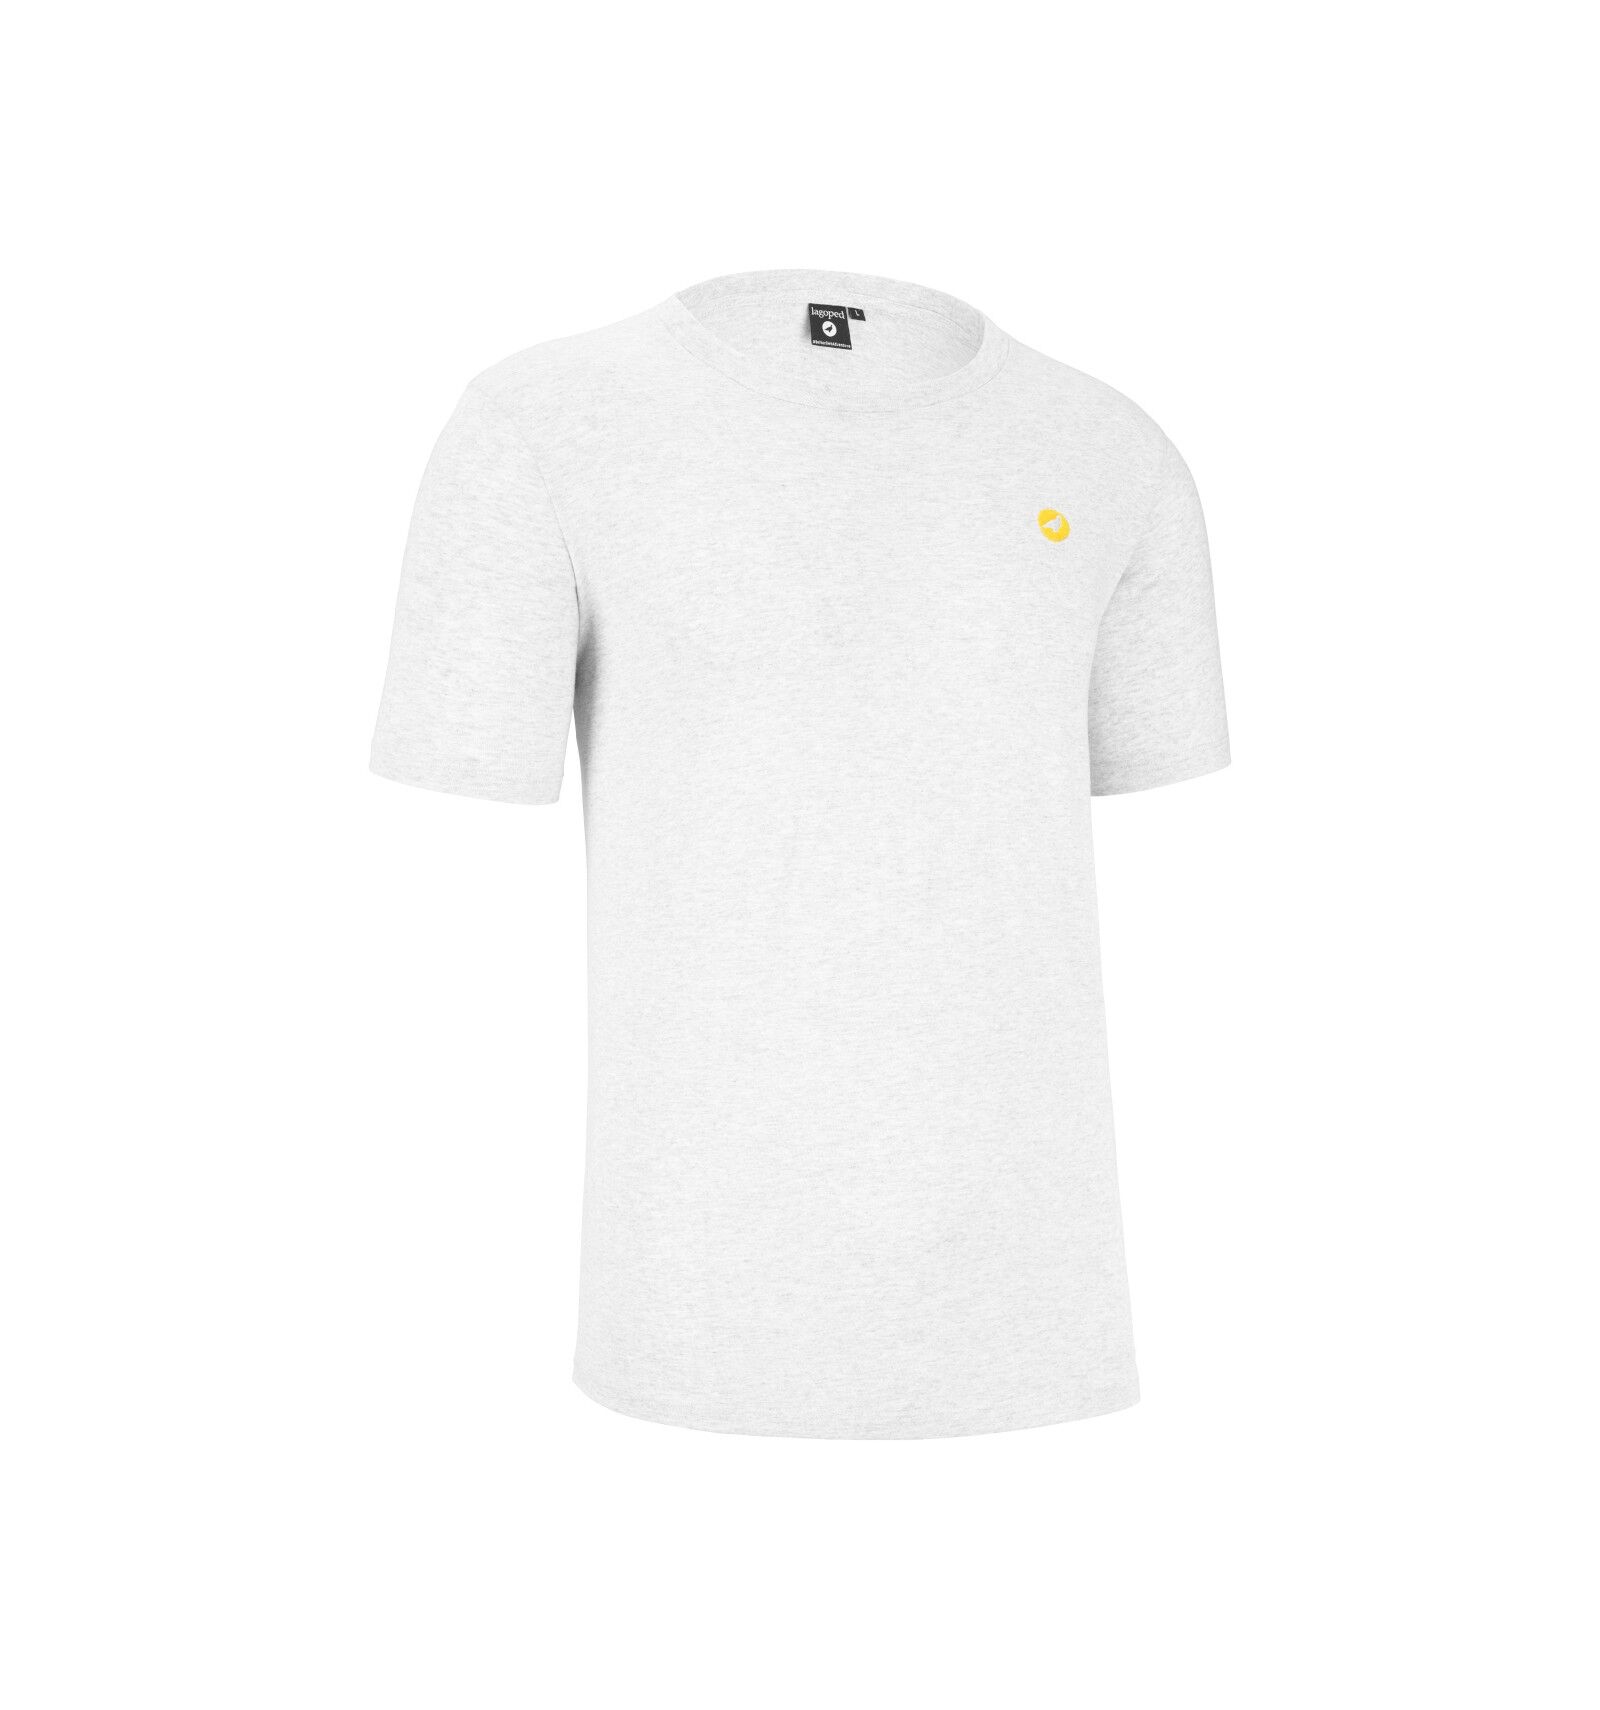 Lagoped Teerec - T-shirt - Uomo